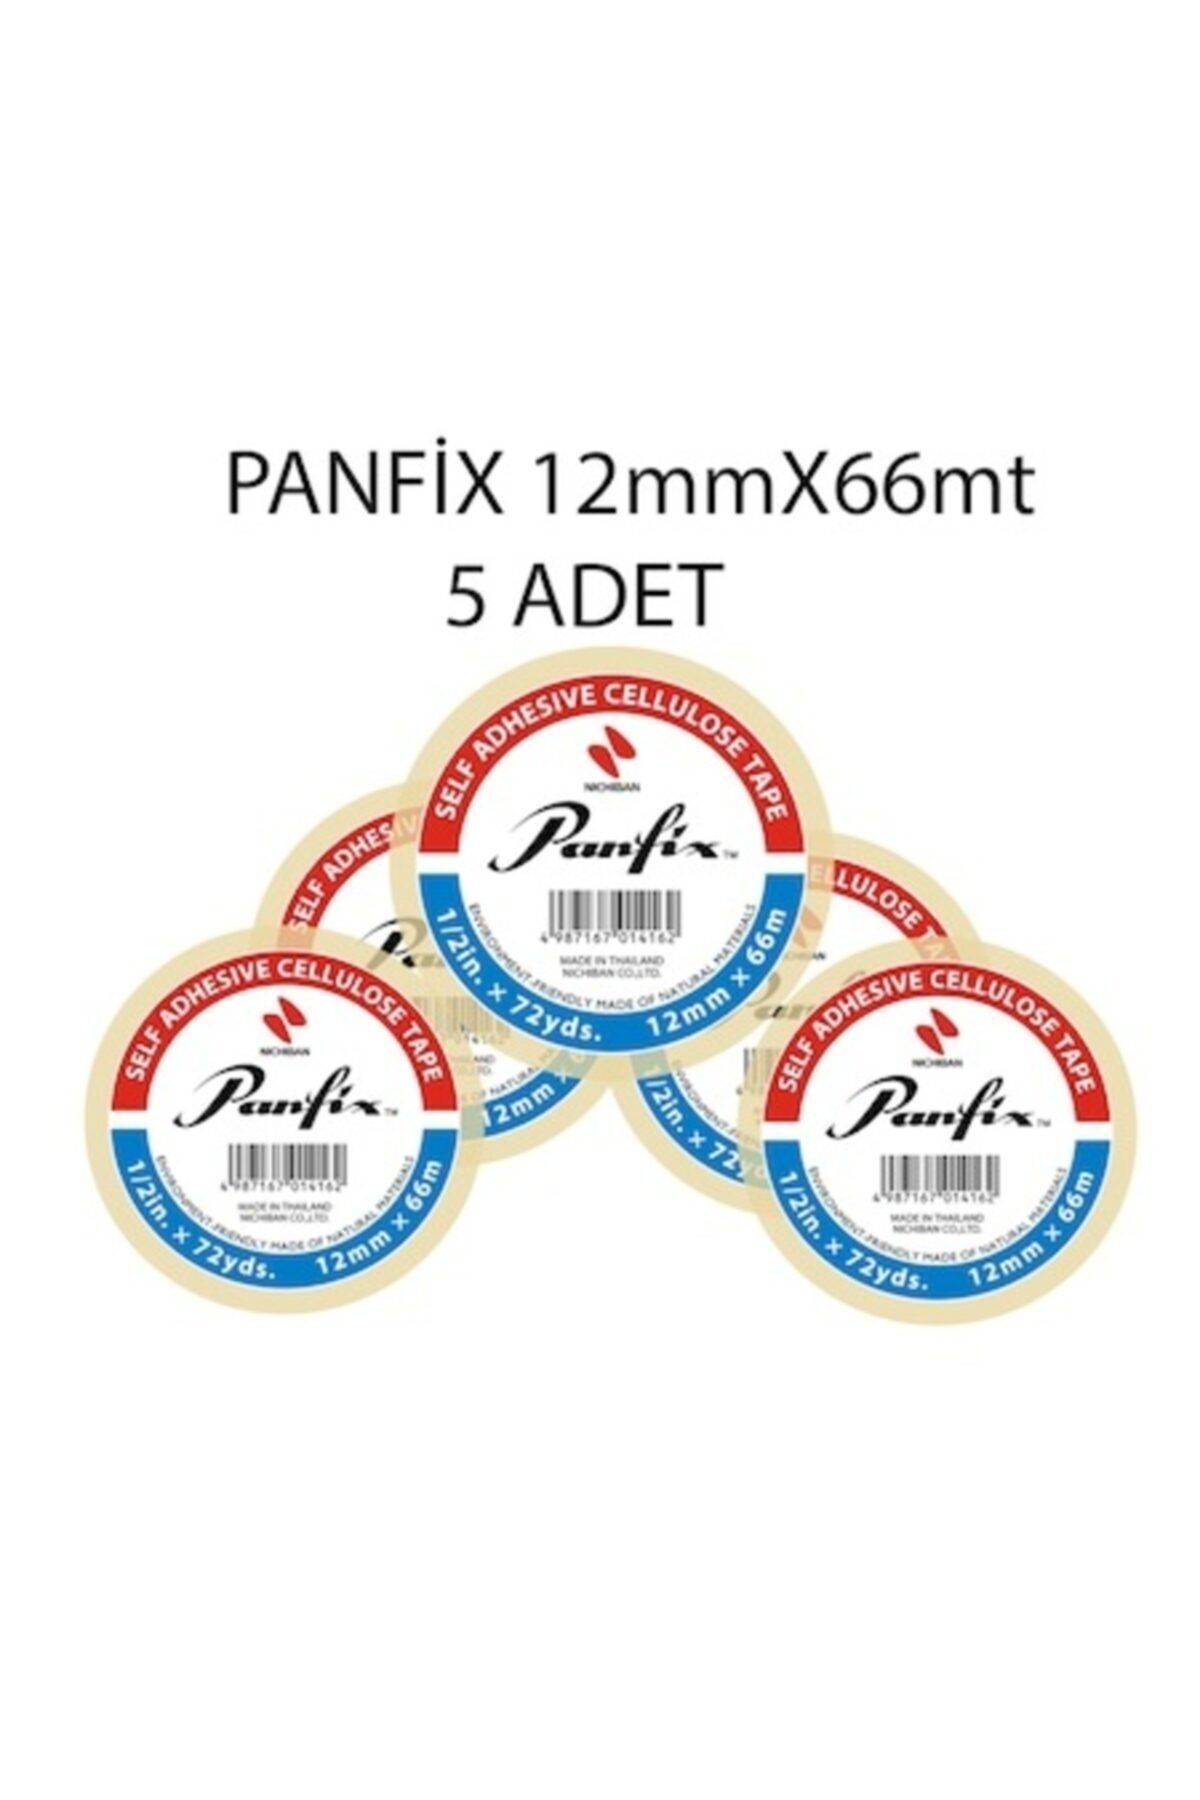 Panfix 12mmx66mt Bant 5 Adet